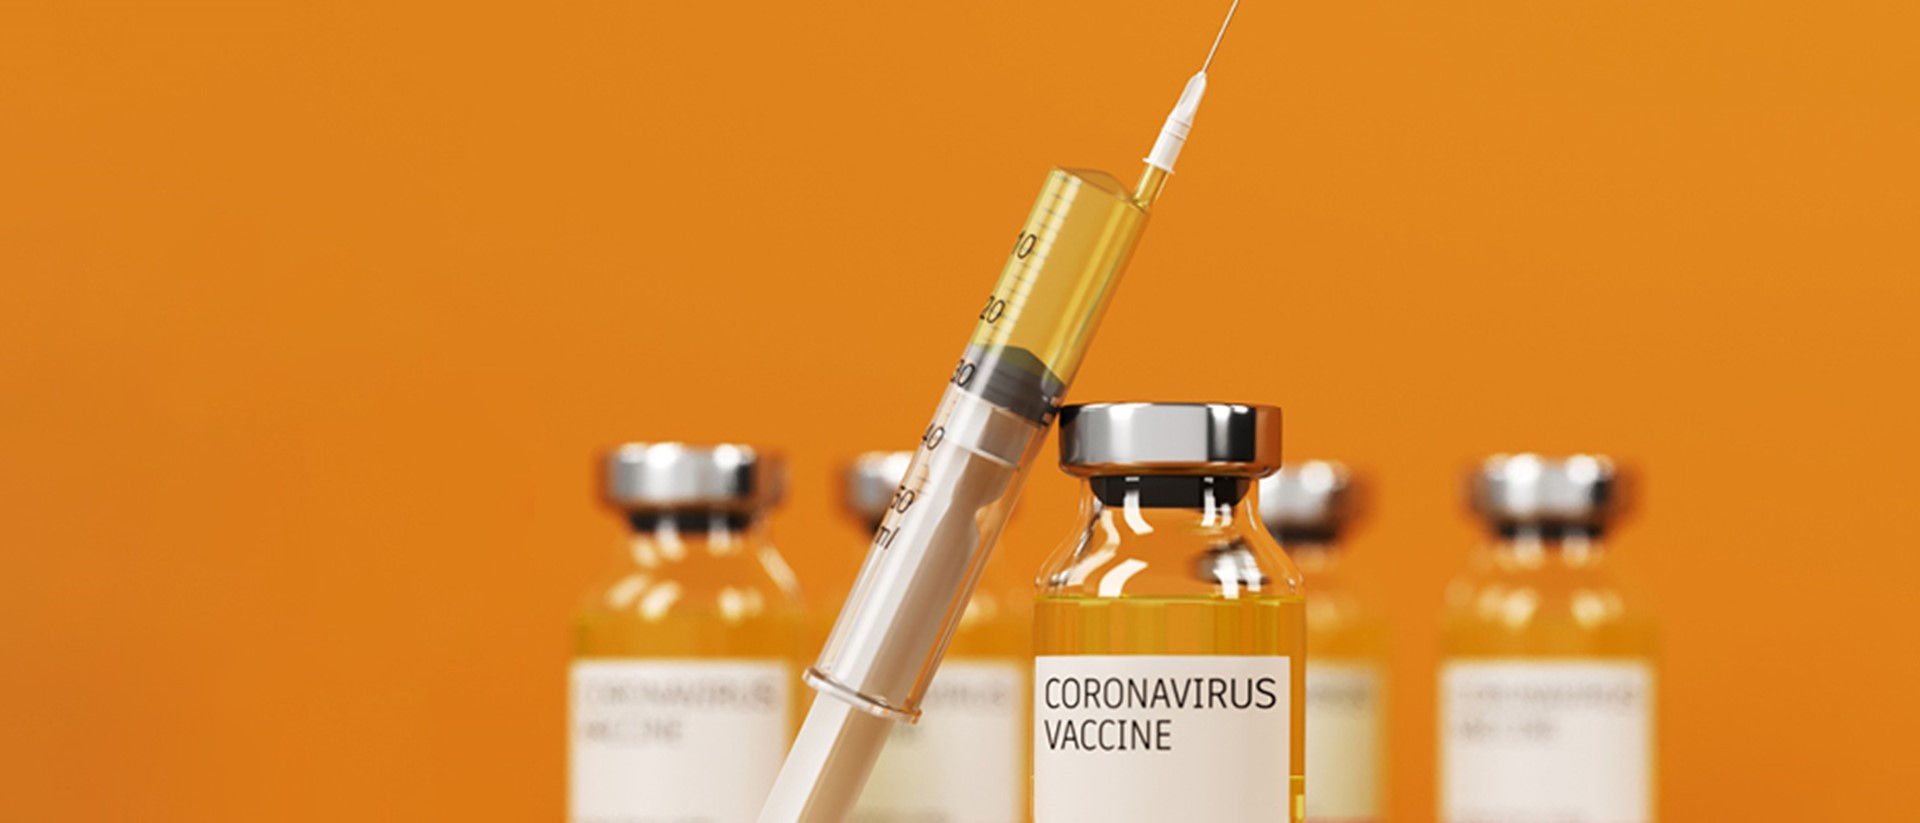 Image of a syringe and jar labelled coronavirus vaccine on an orange background